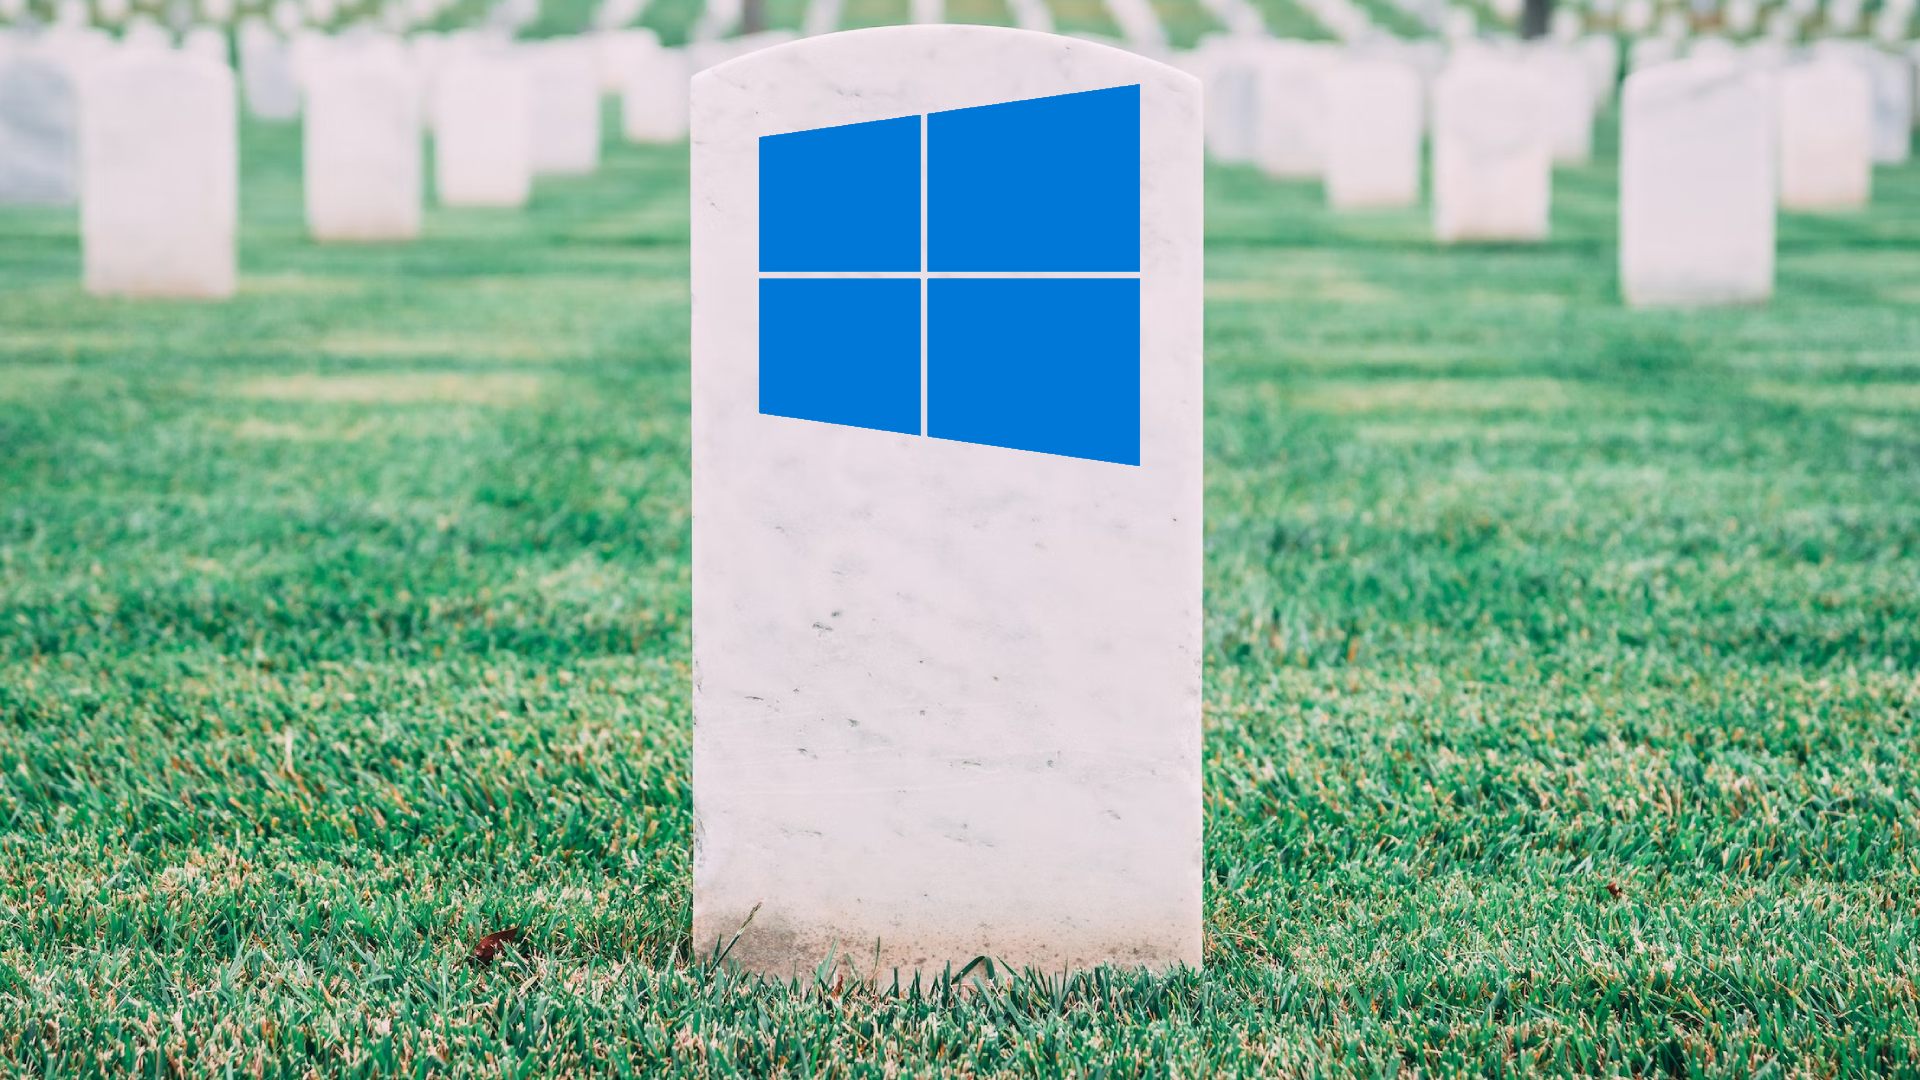 Windows 10 downloads will soon bite the dust